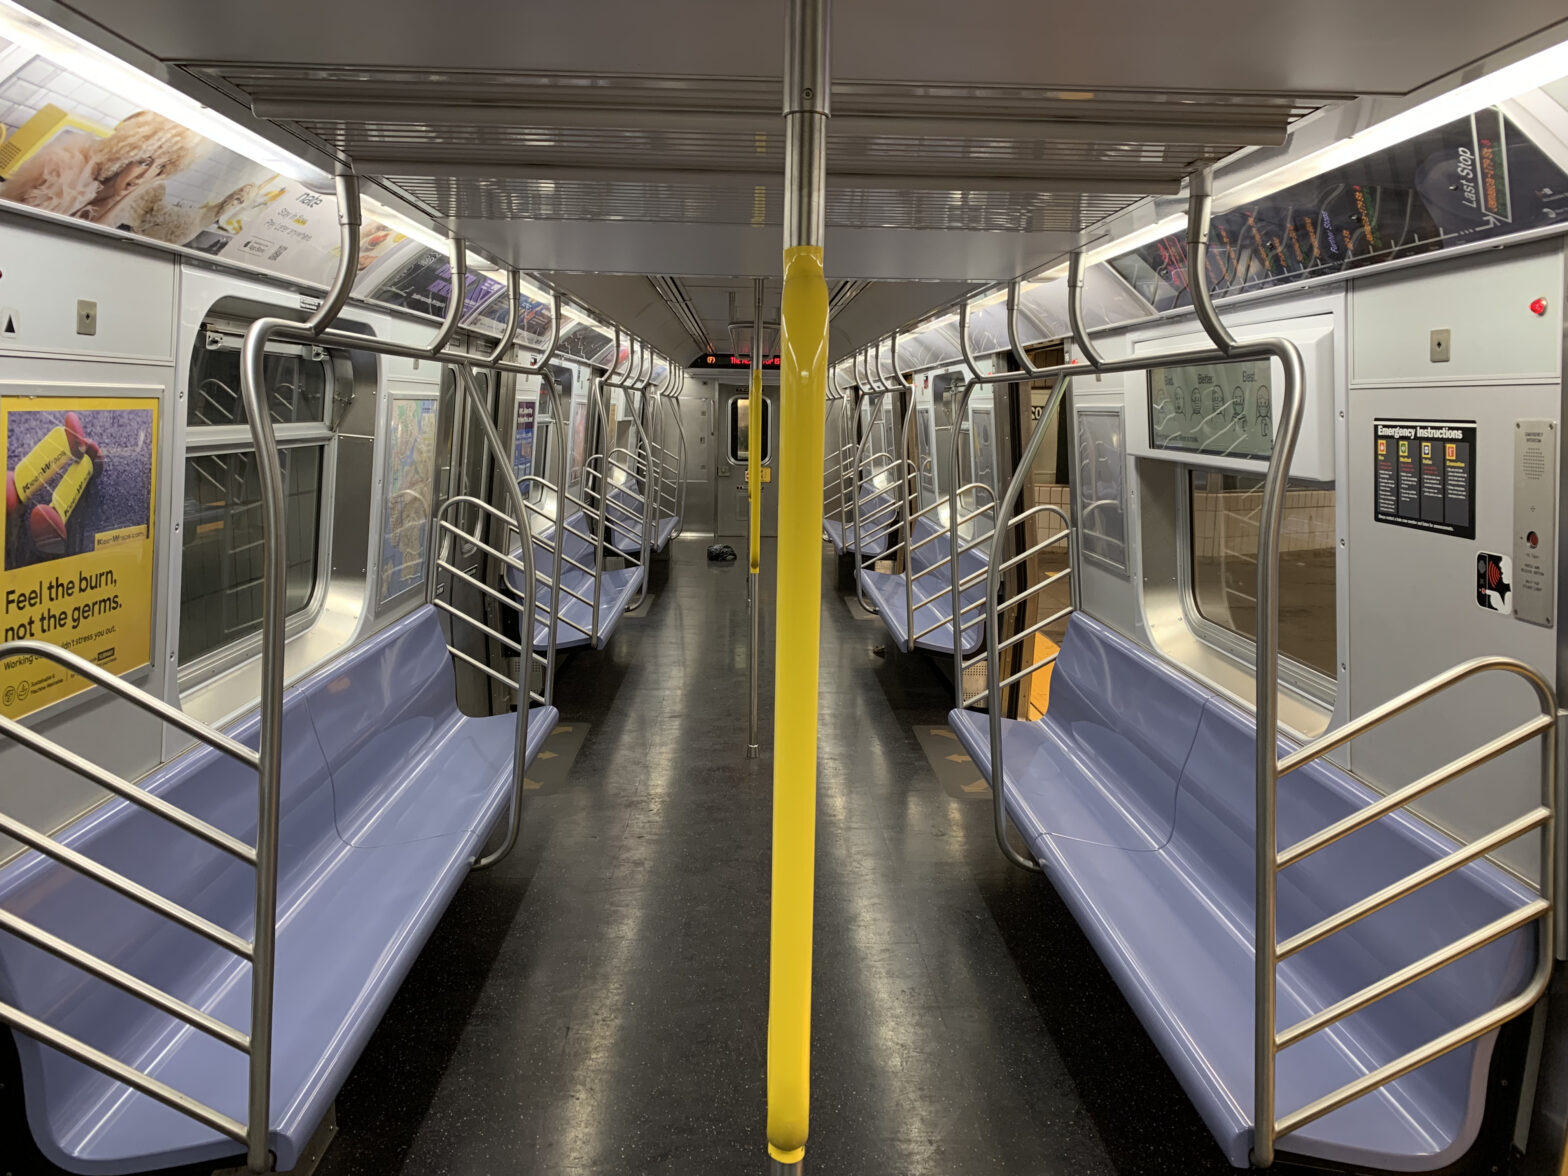 The New York Subway in Midtown Manhattan, empty